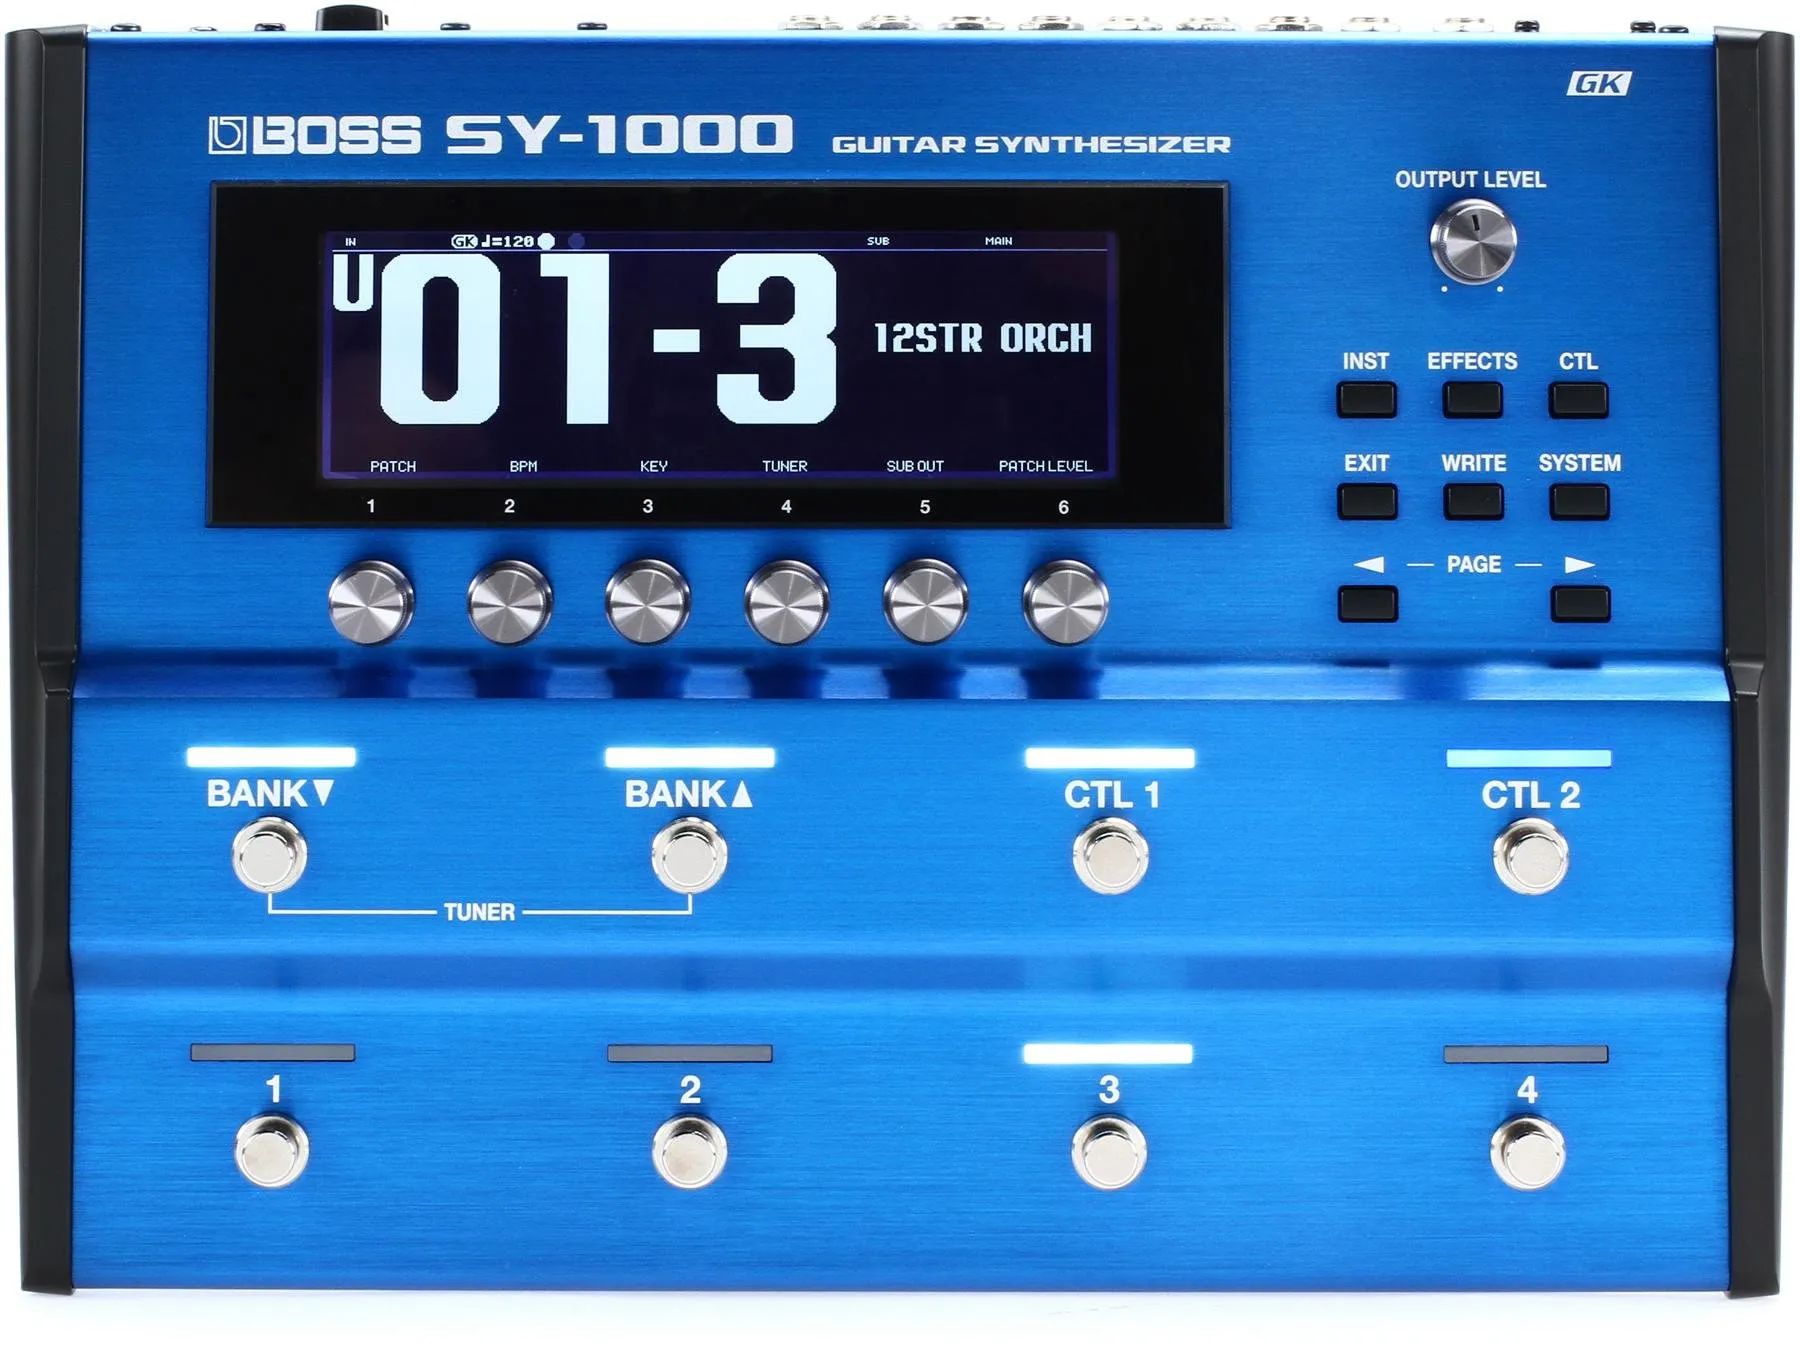 Boss sy. Boss sy-1000. Boss gt-1000. Педаль Synthesizer. Педаль эффектов для синтезатора.